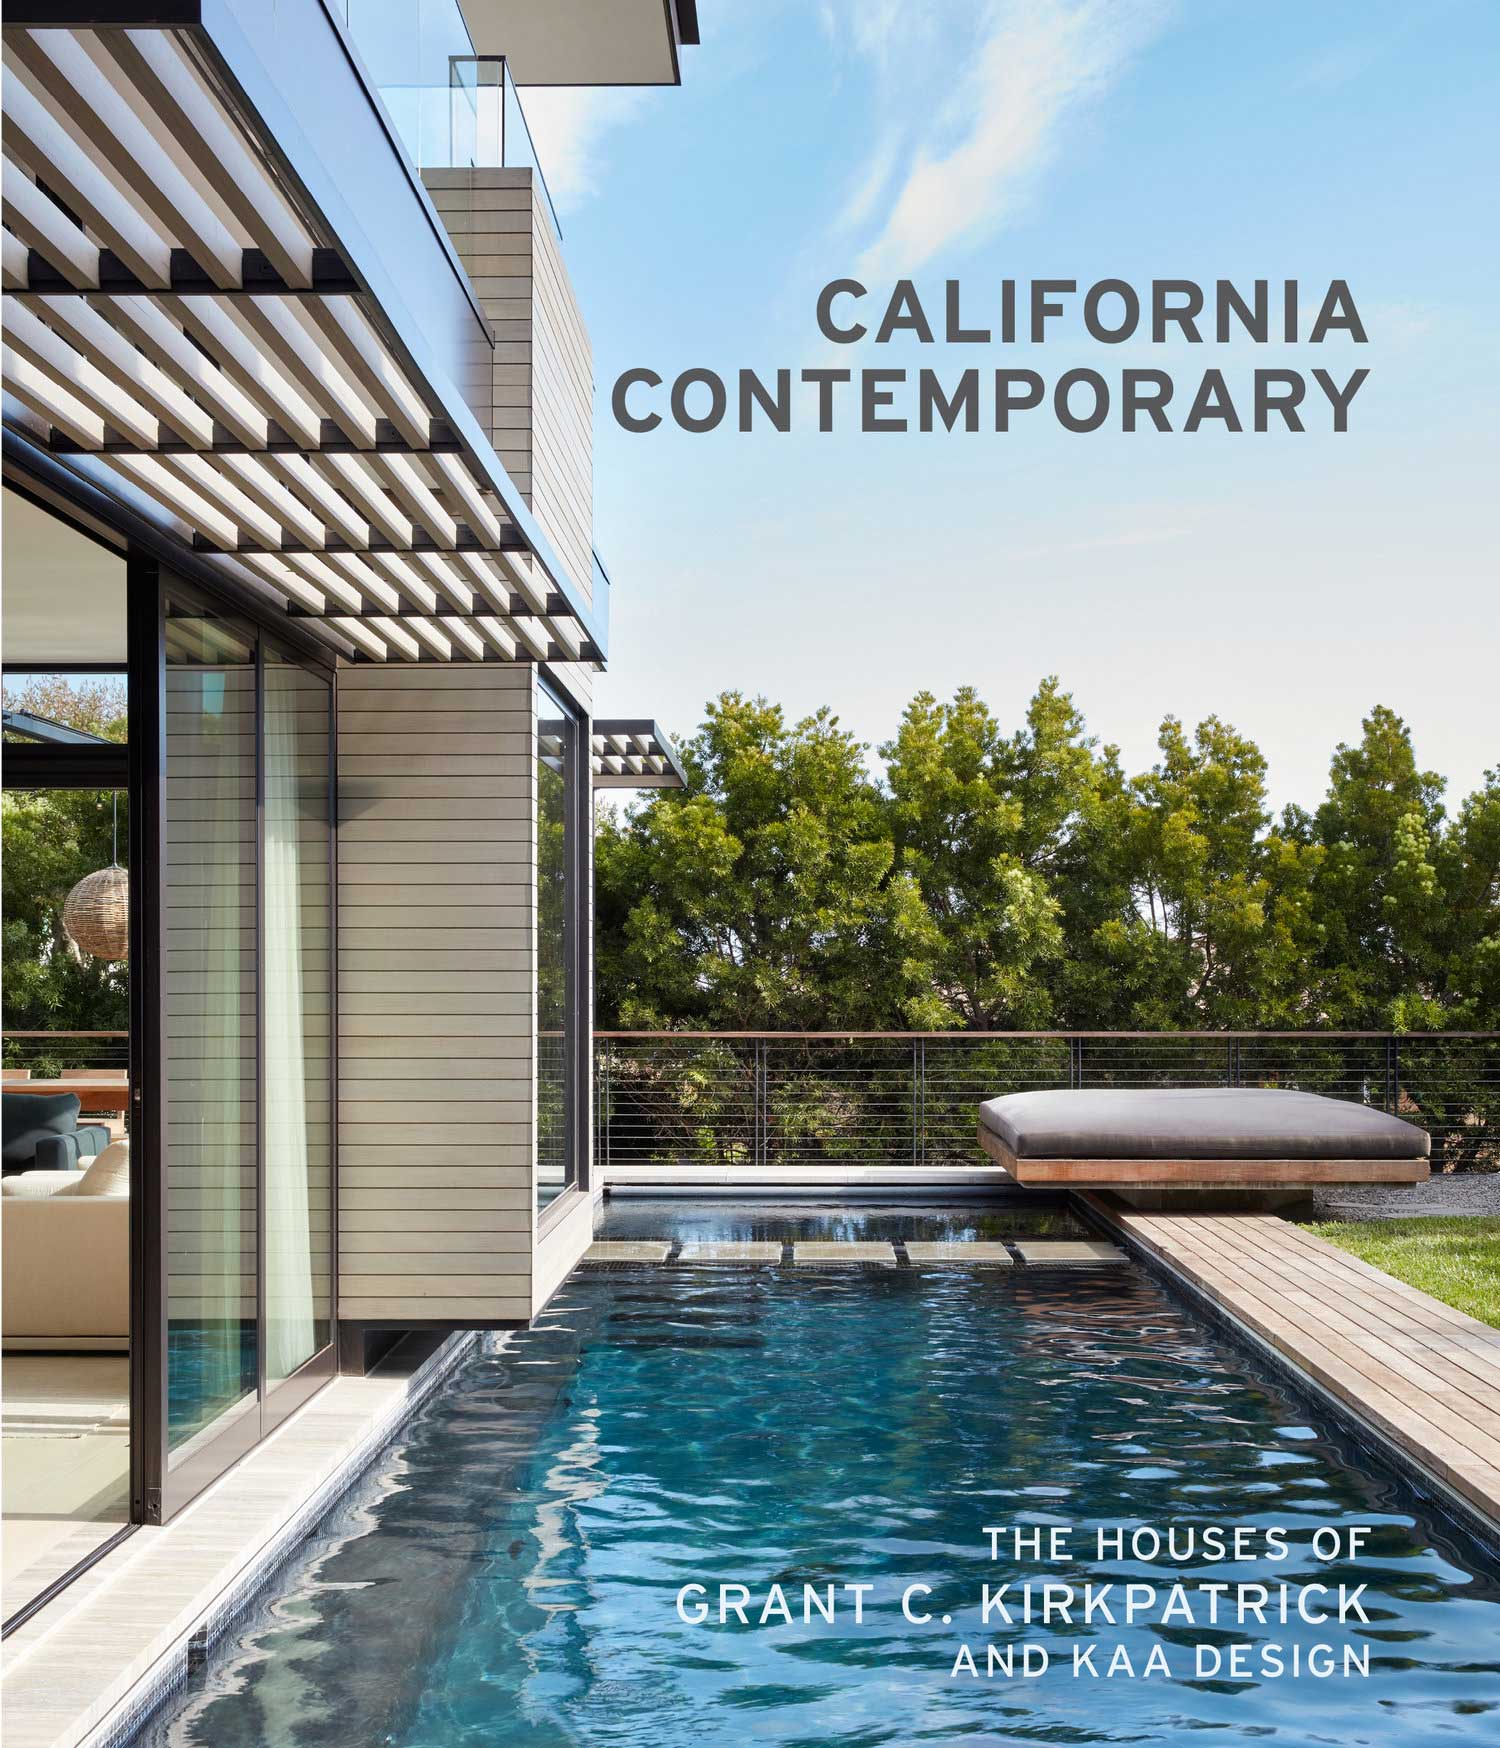 California Contemporary book cover